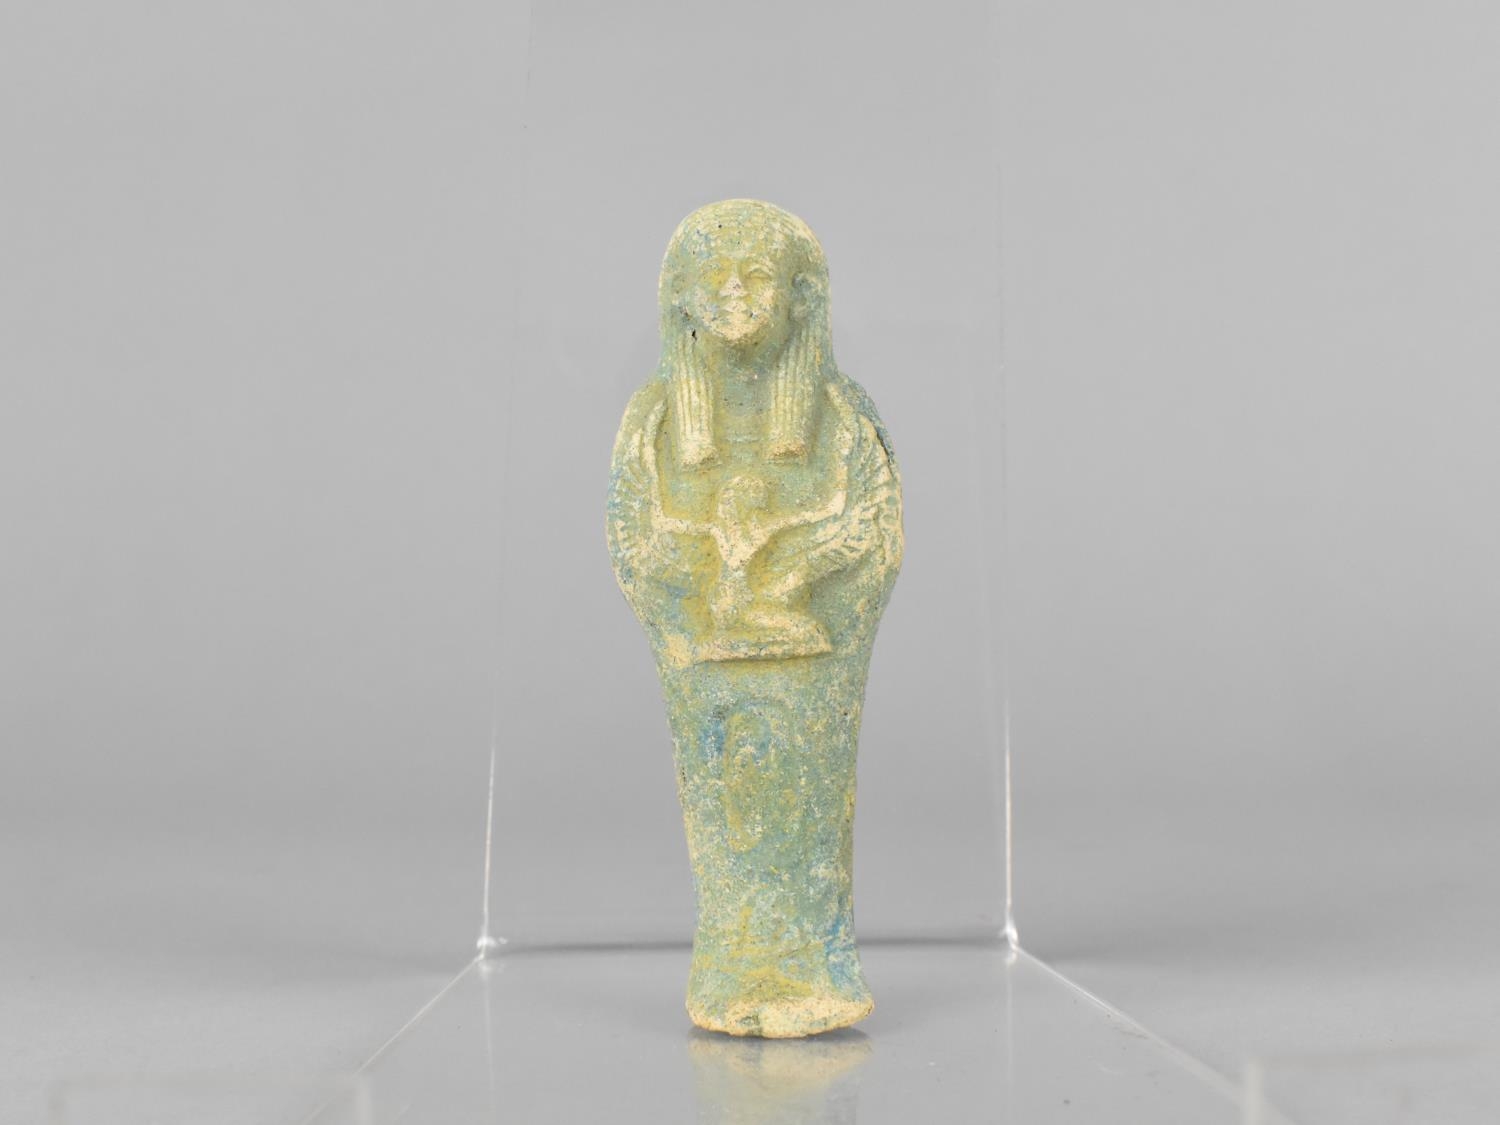 An Egyptian Blue Glazed Faience Ushabti Figure in Typical Mummified Form, 9cms High